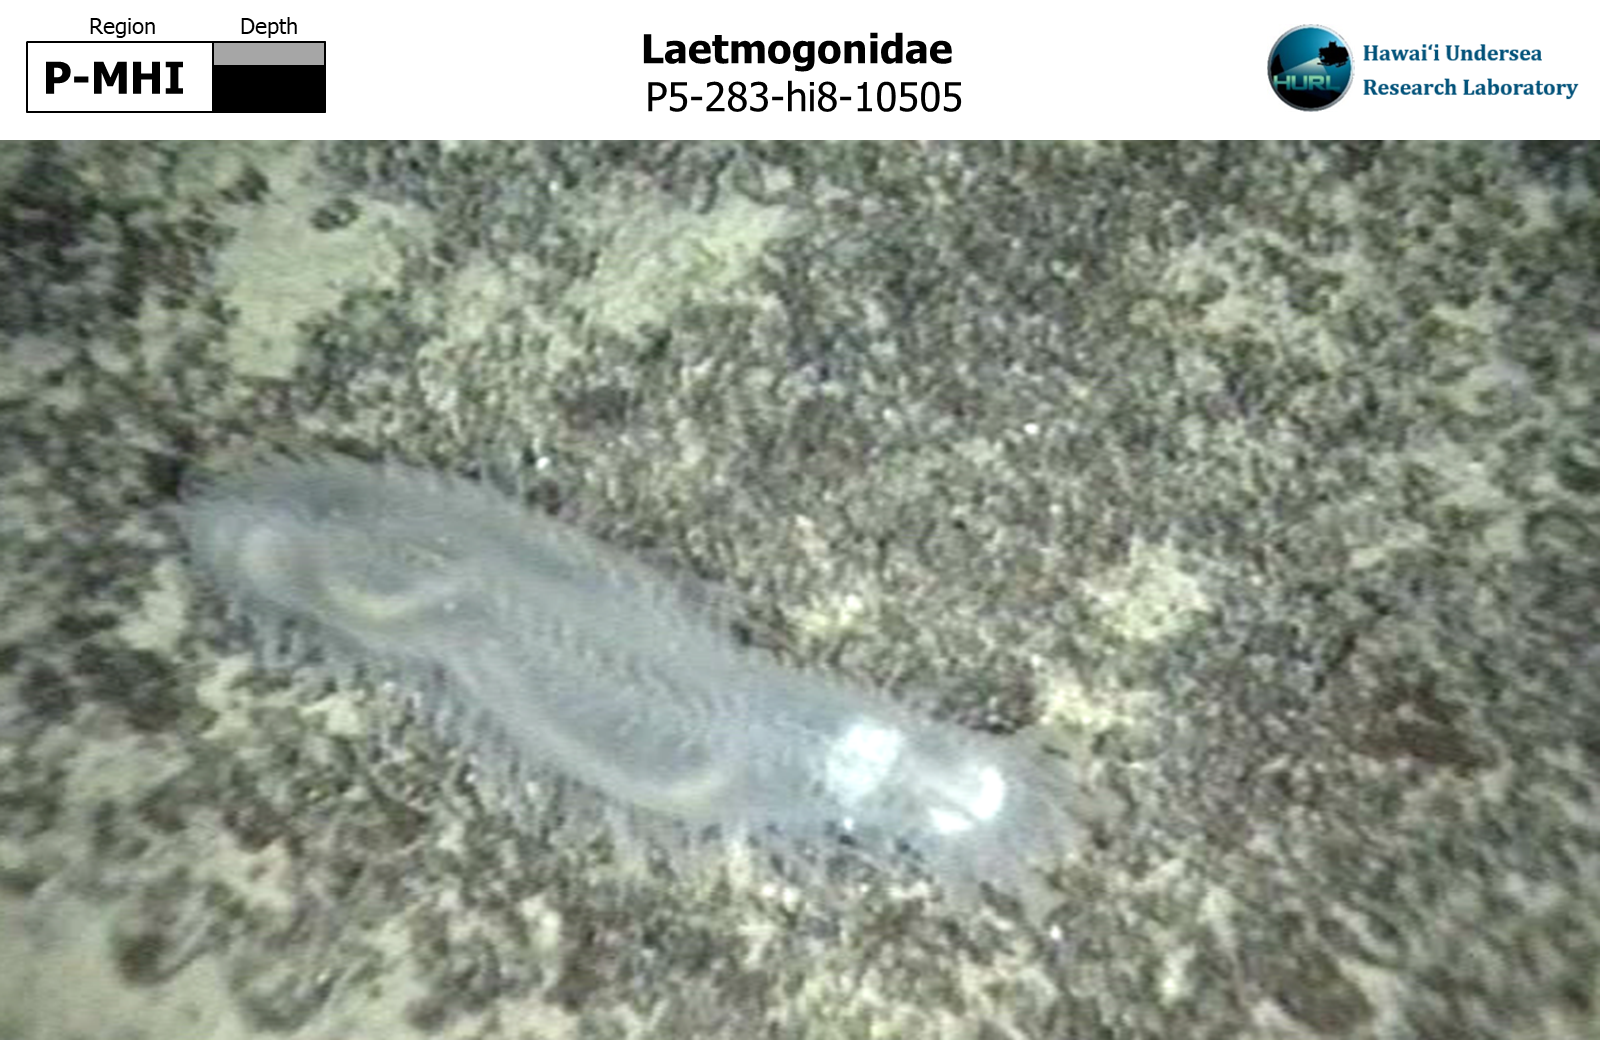 Laetmogonidae